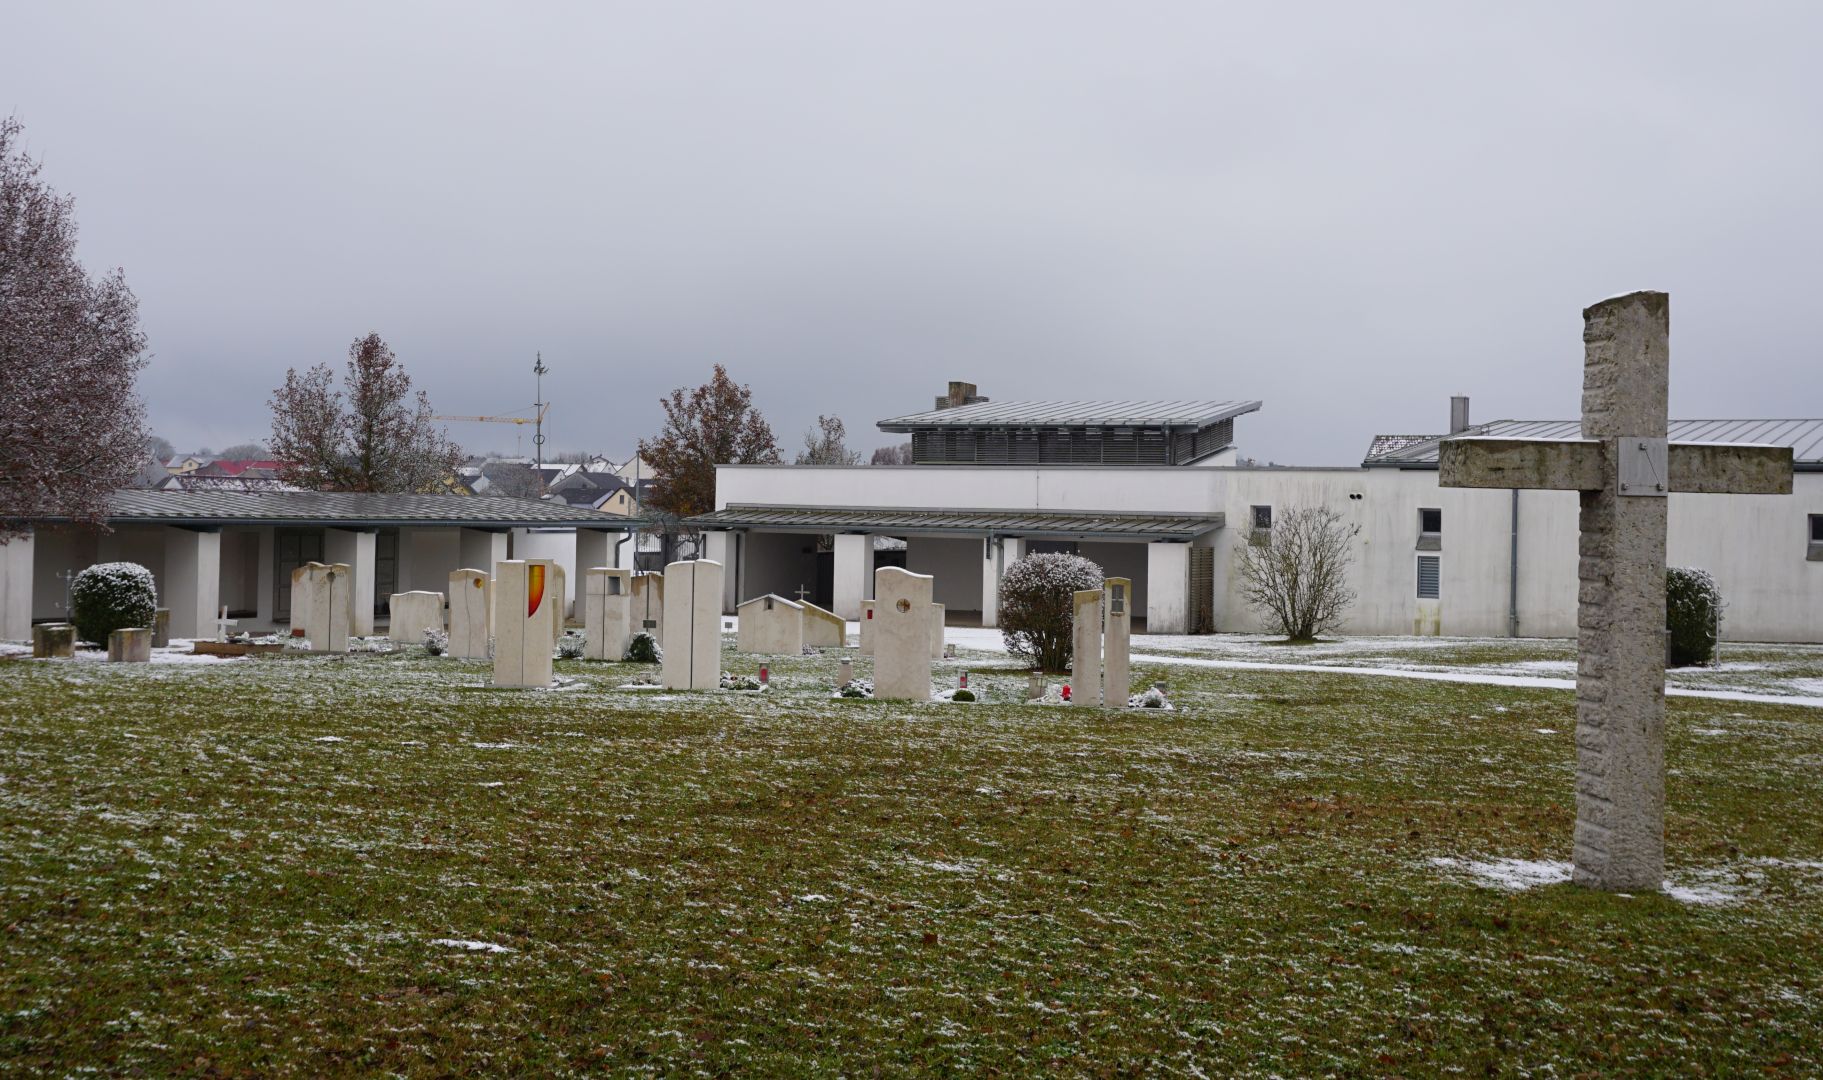 Neuer Friedhof in Pollenfeld 